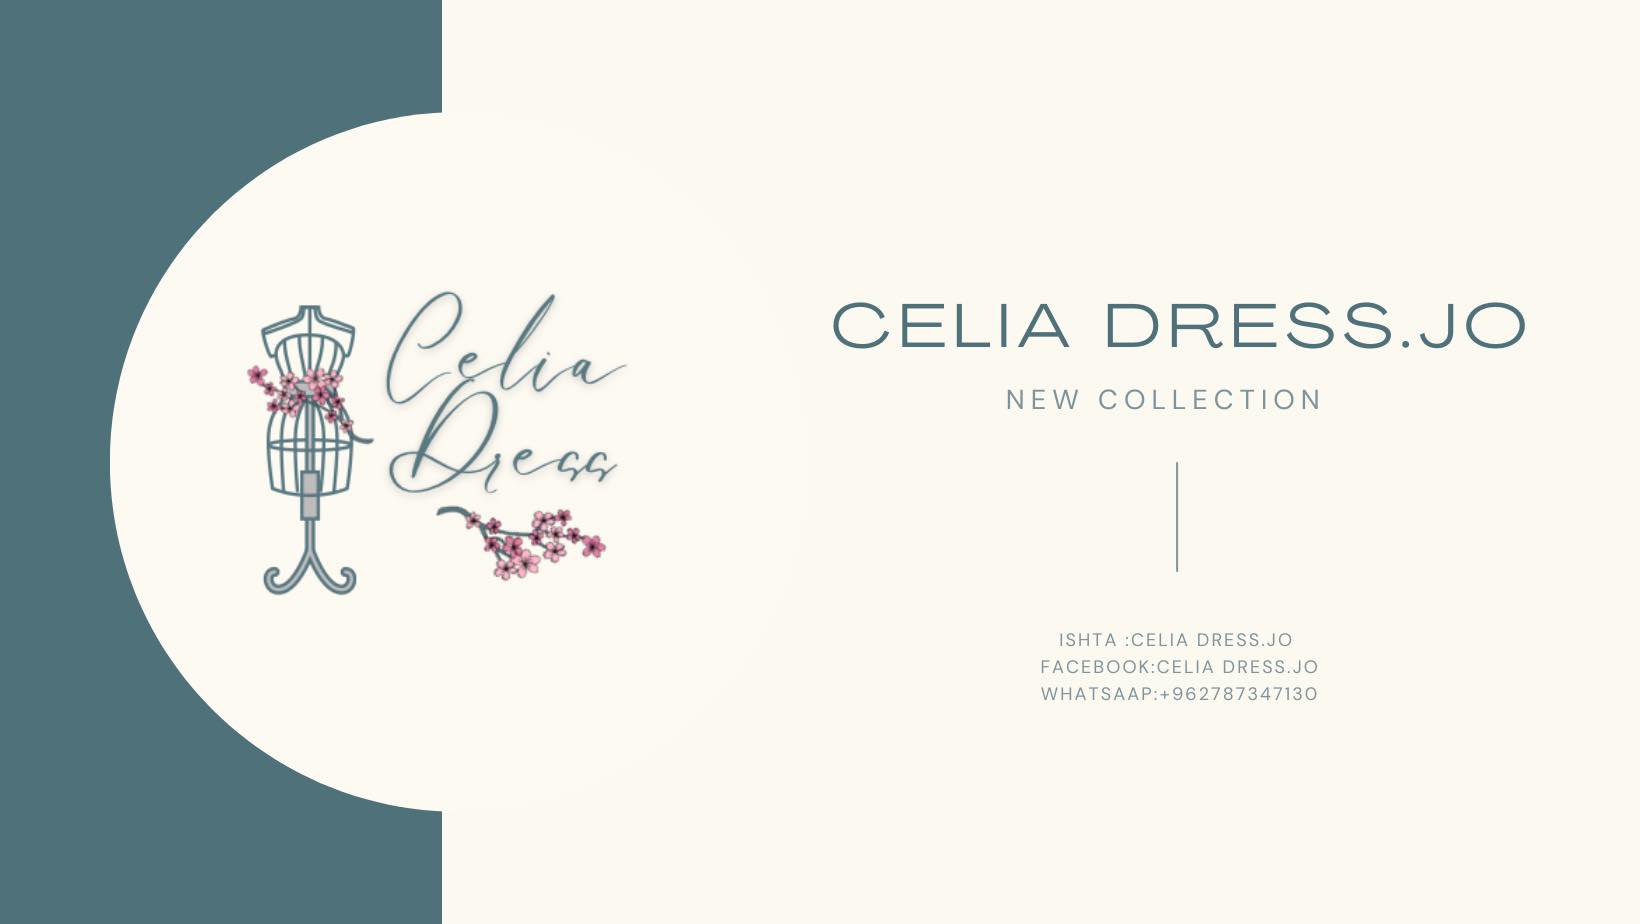 Celia dress.jo